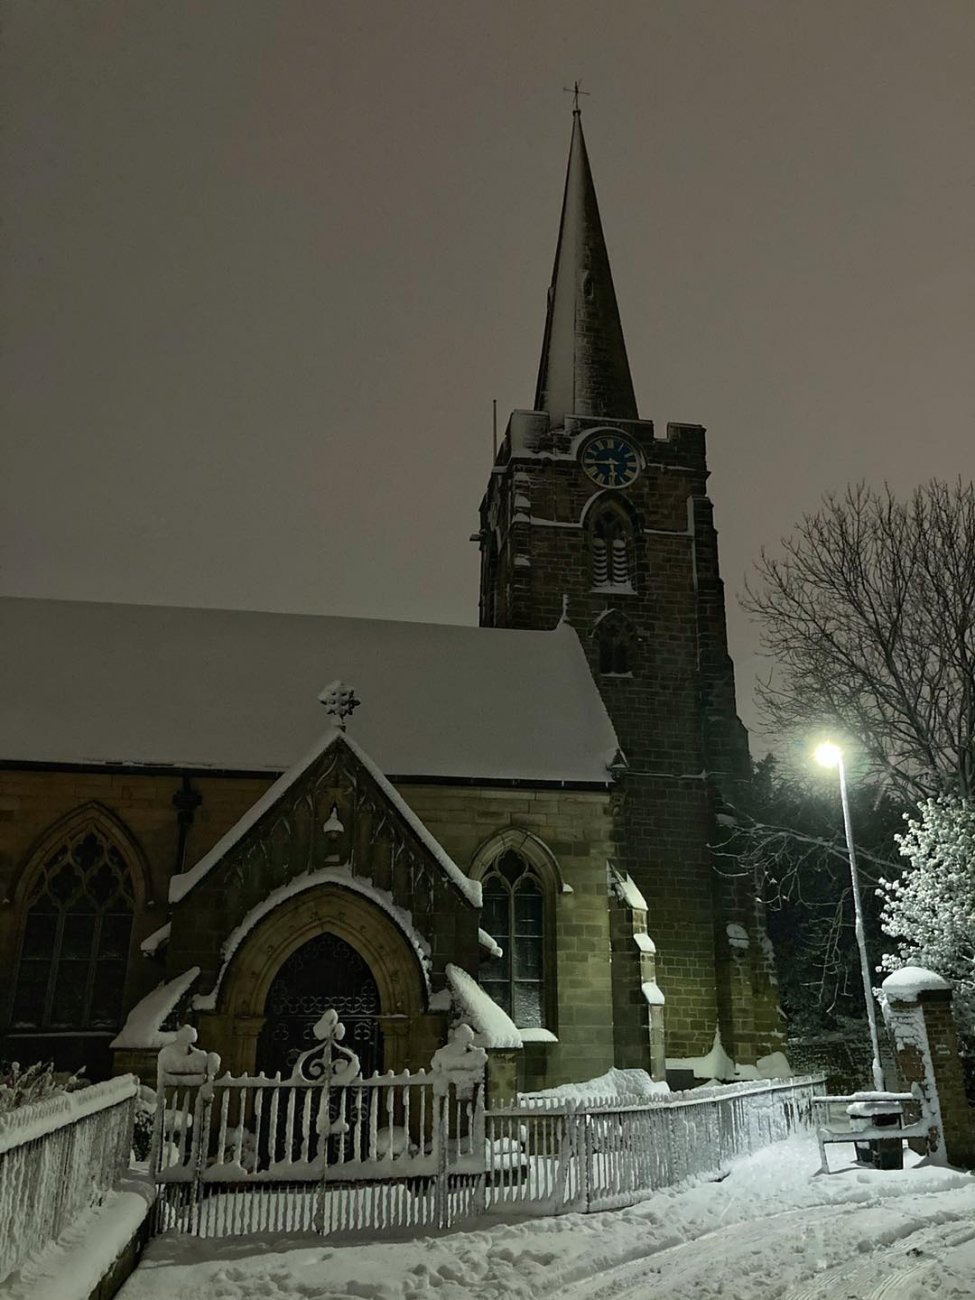 Photograph of Snowy Spondon Nights - St Werburgh's Church